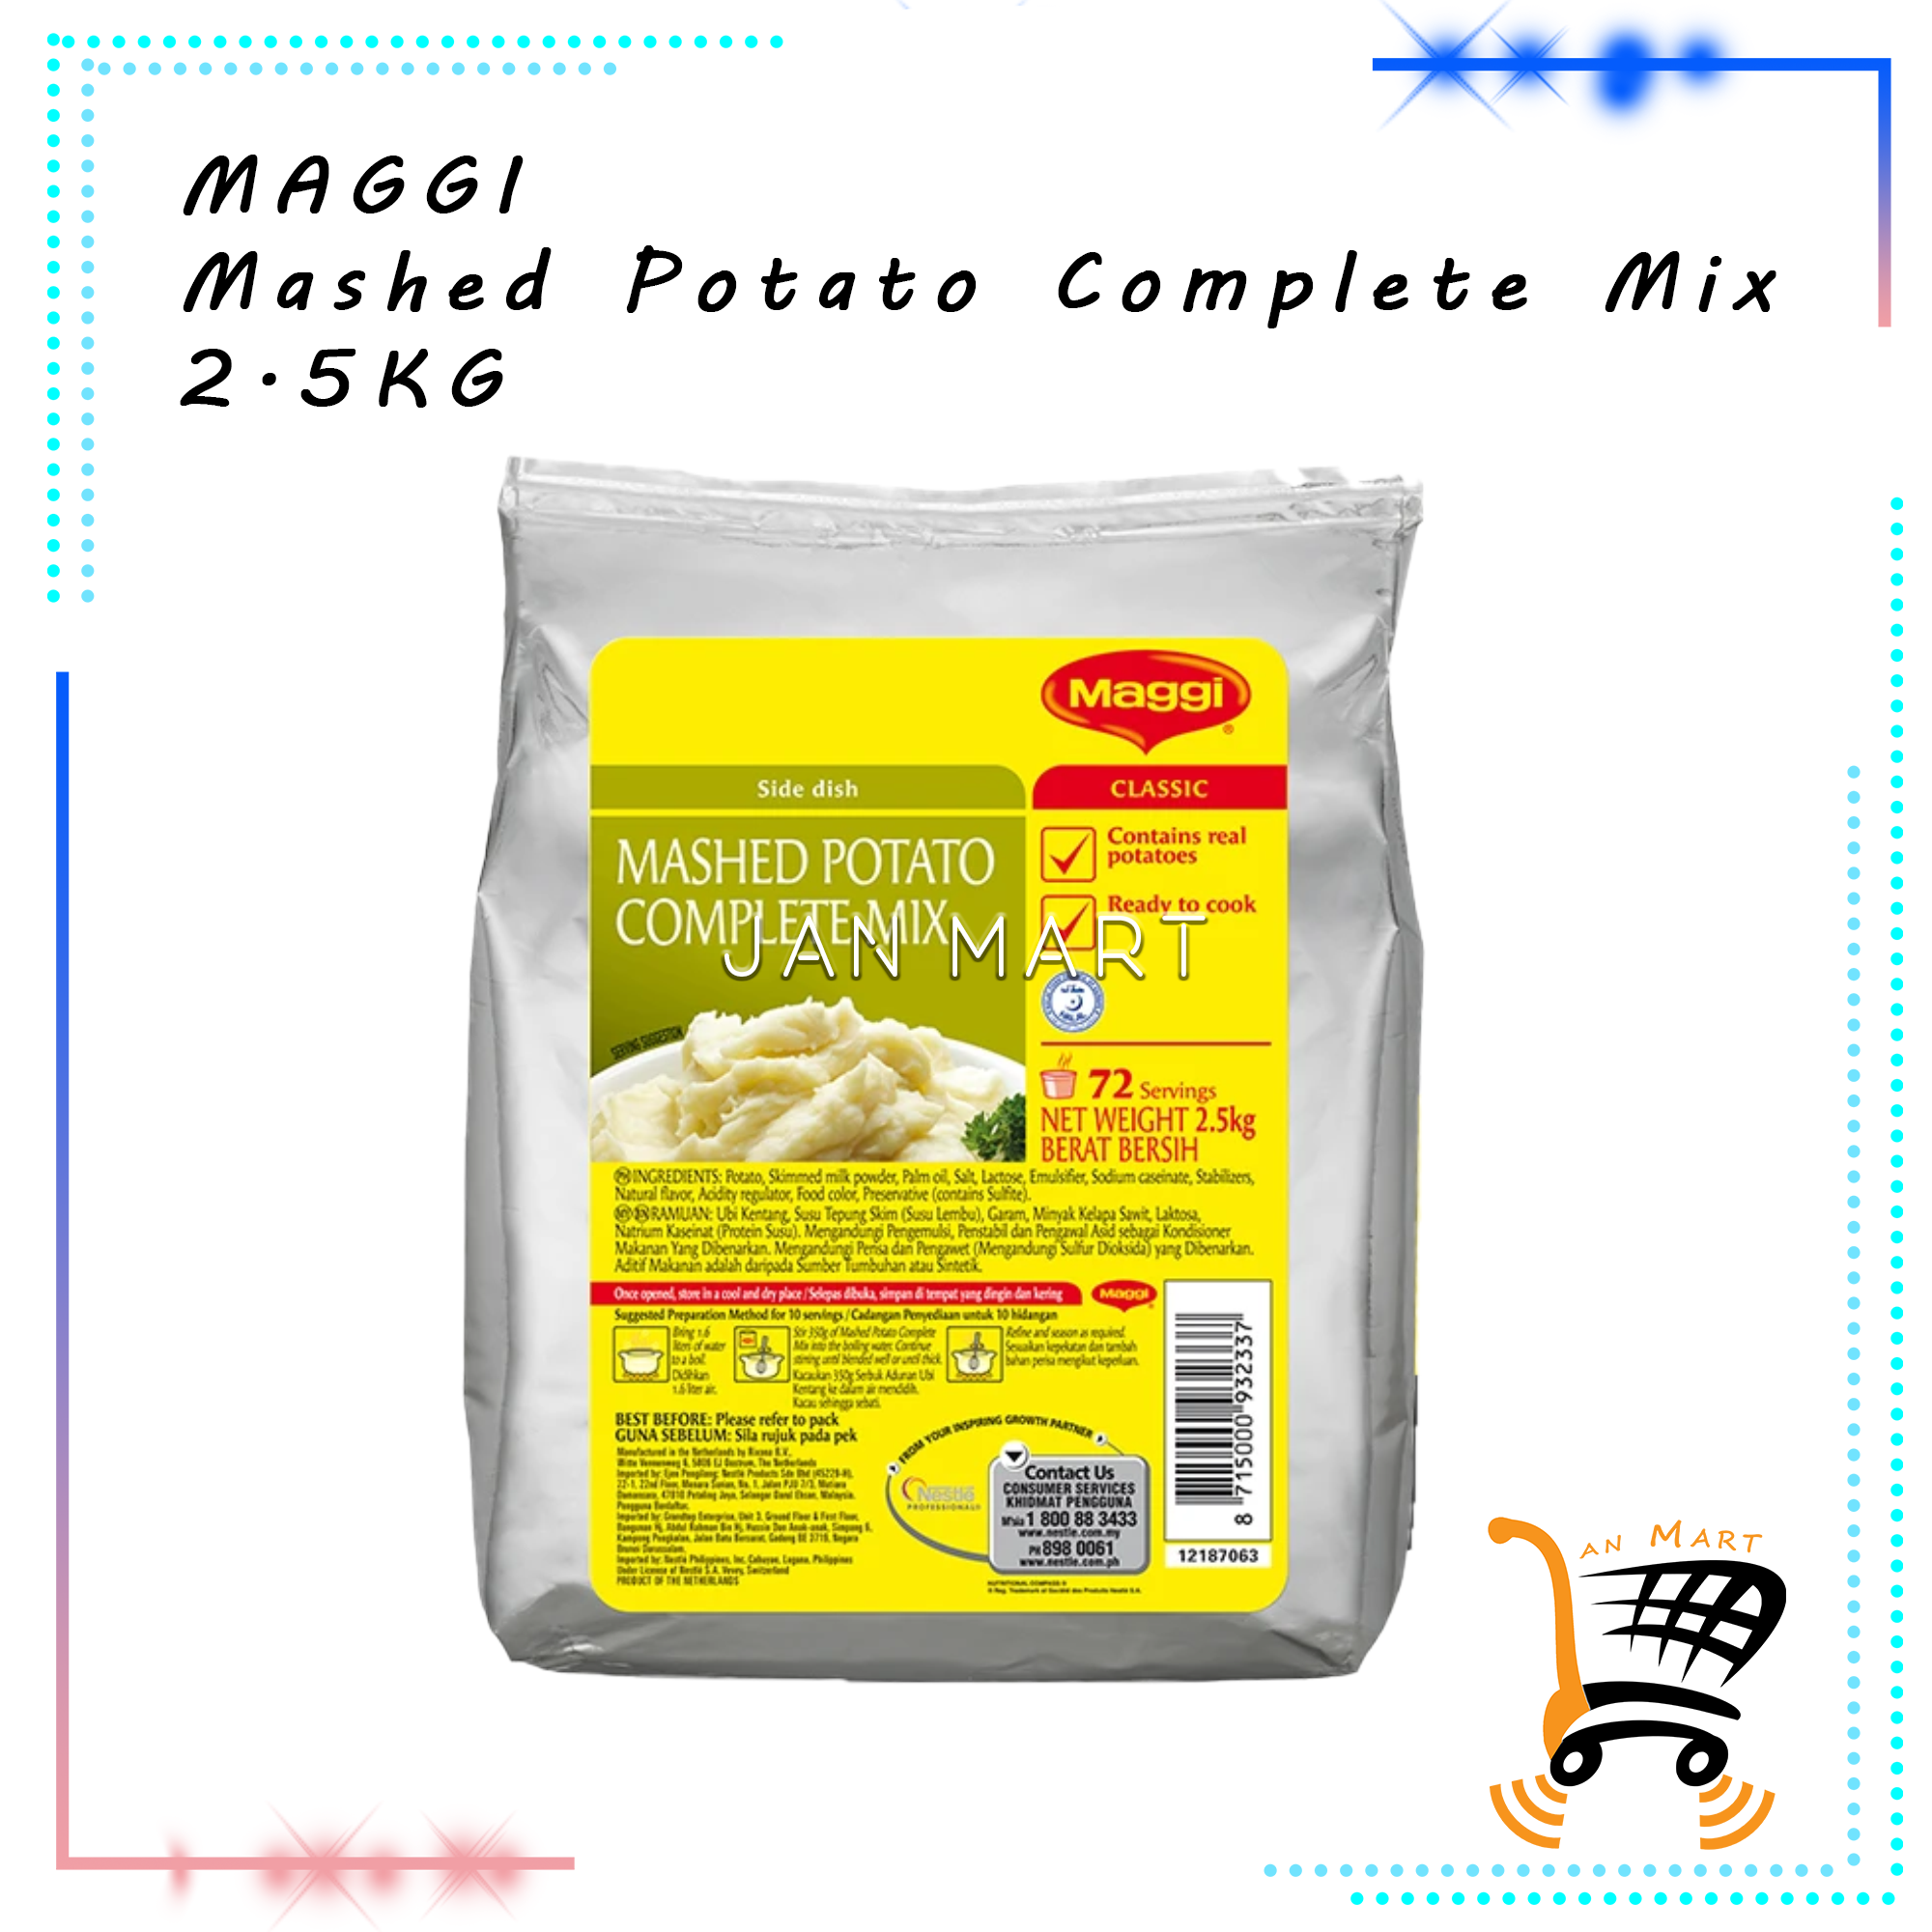 MAGGI Mashed Potato Complete Mix 2.5KG